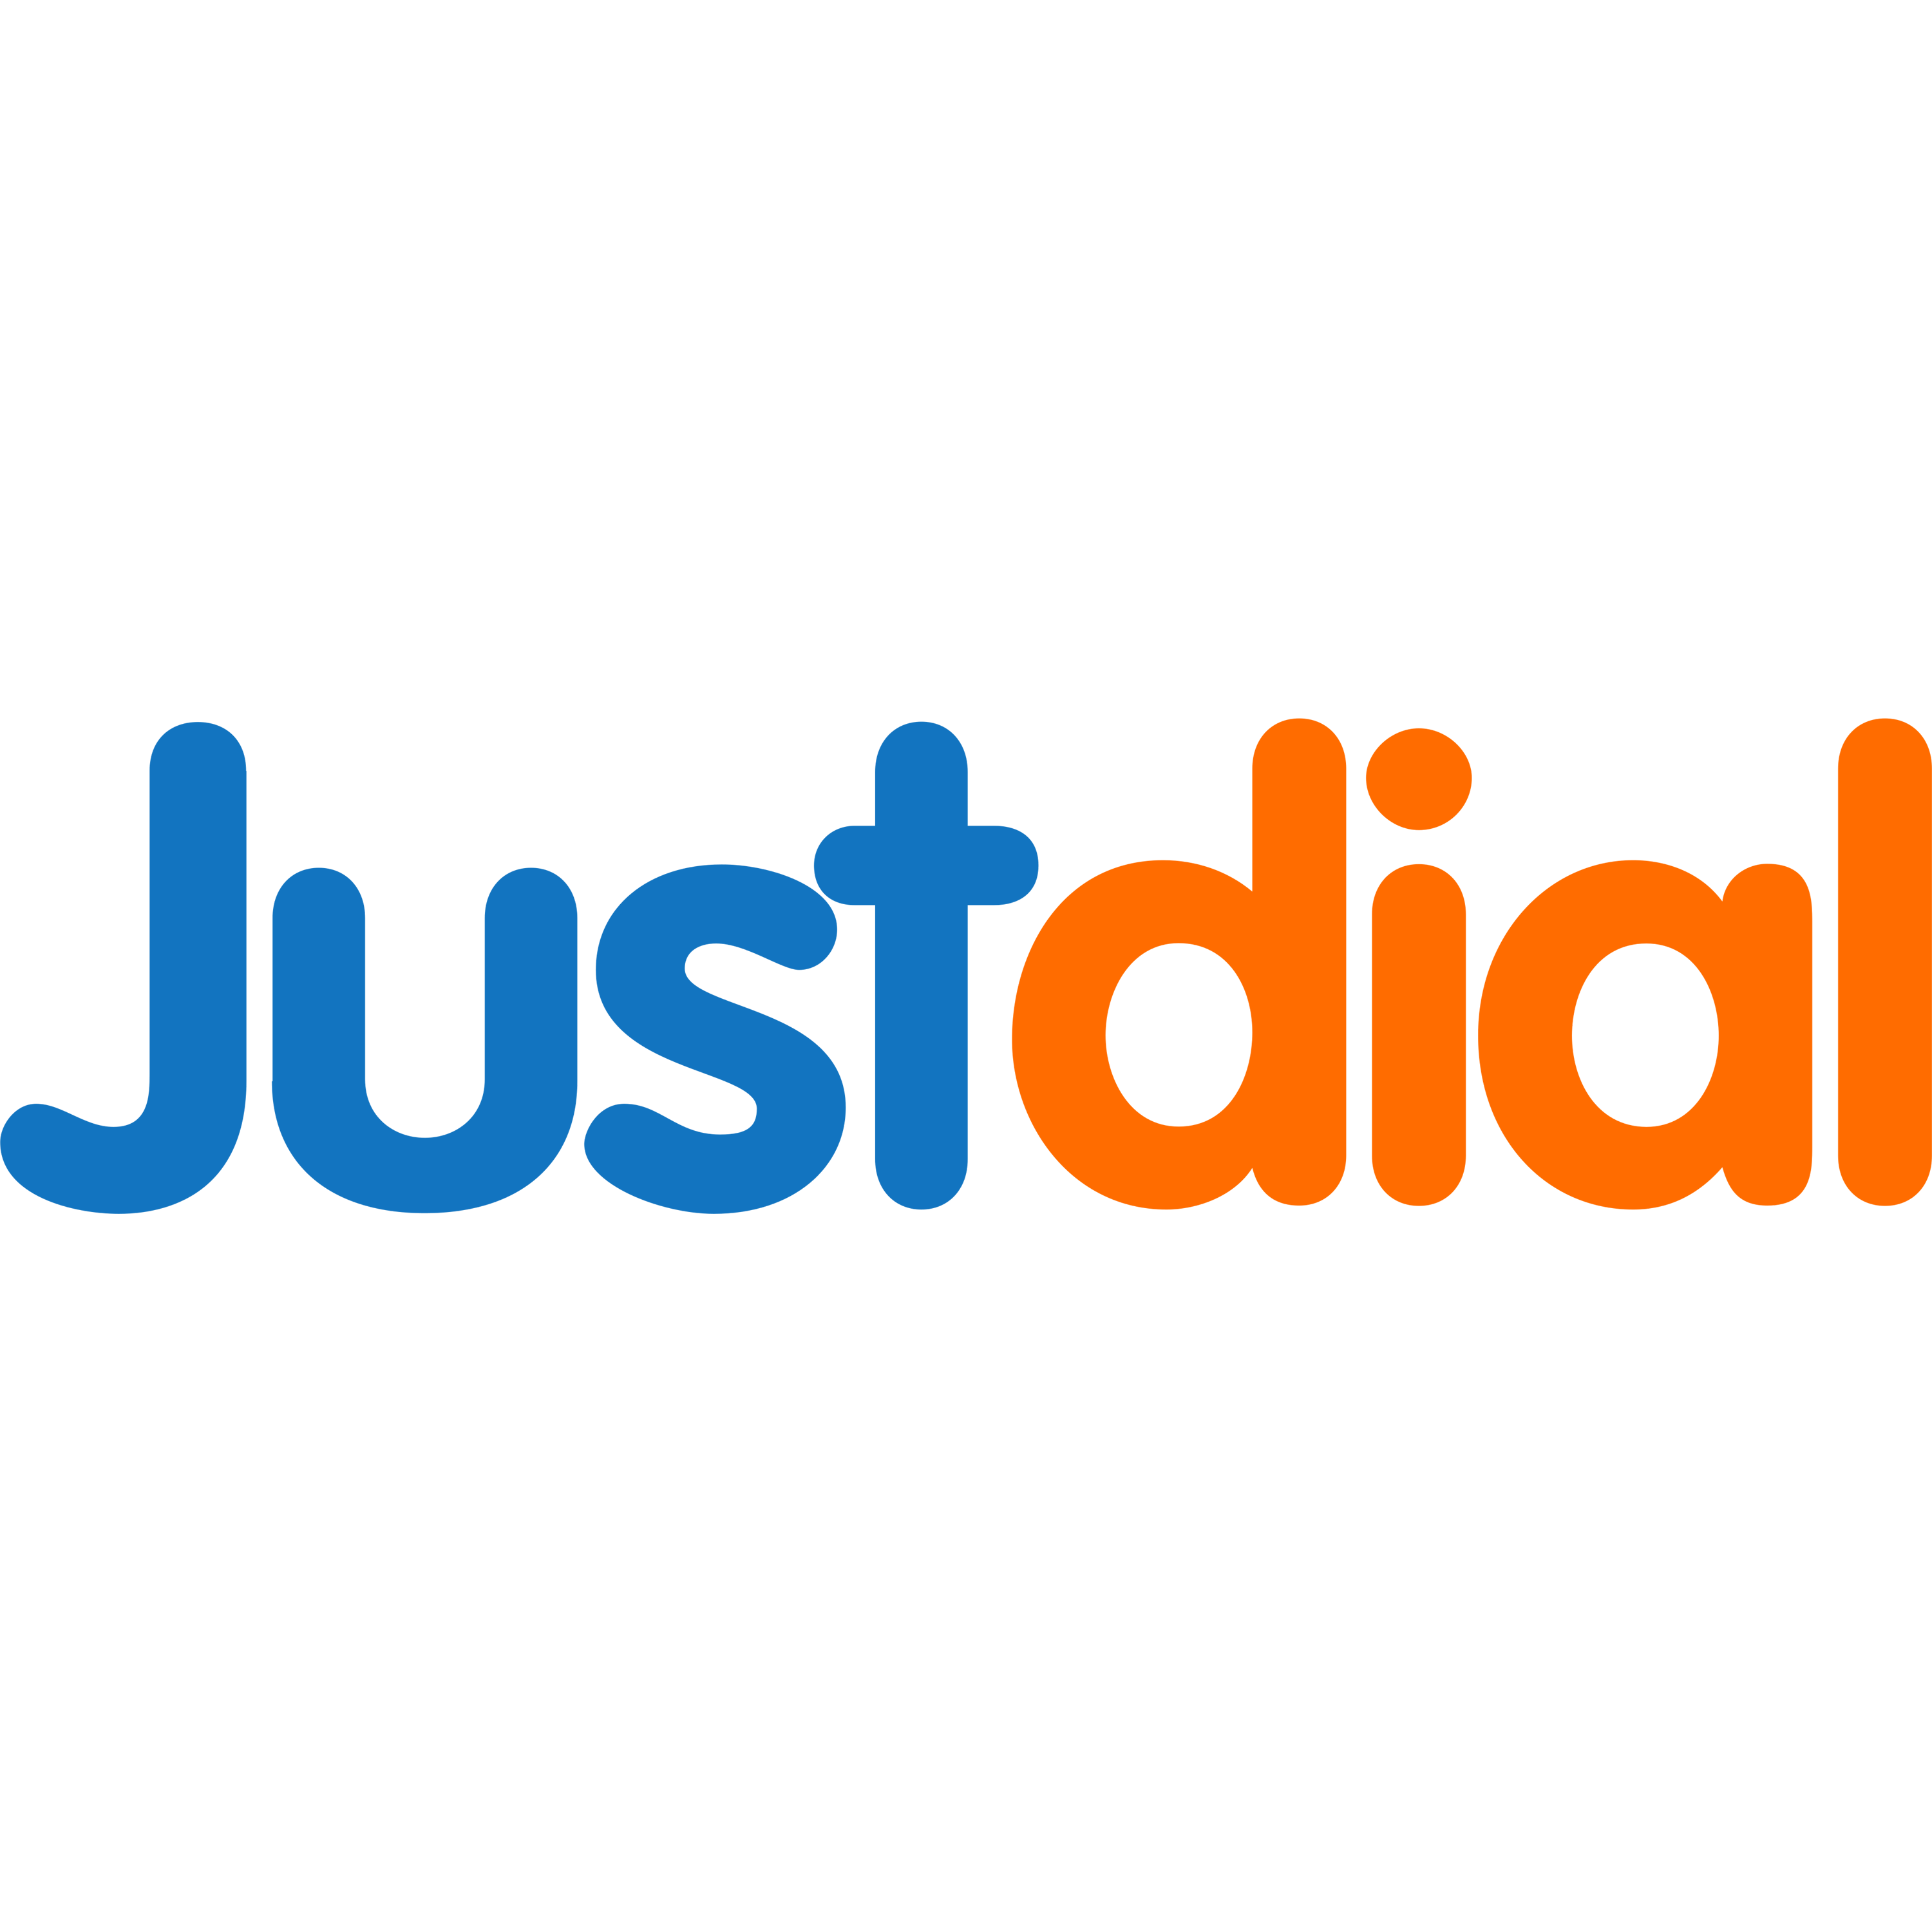 Justdial Logo Transparent Image